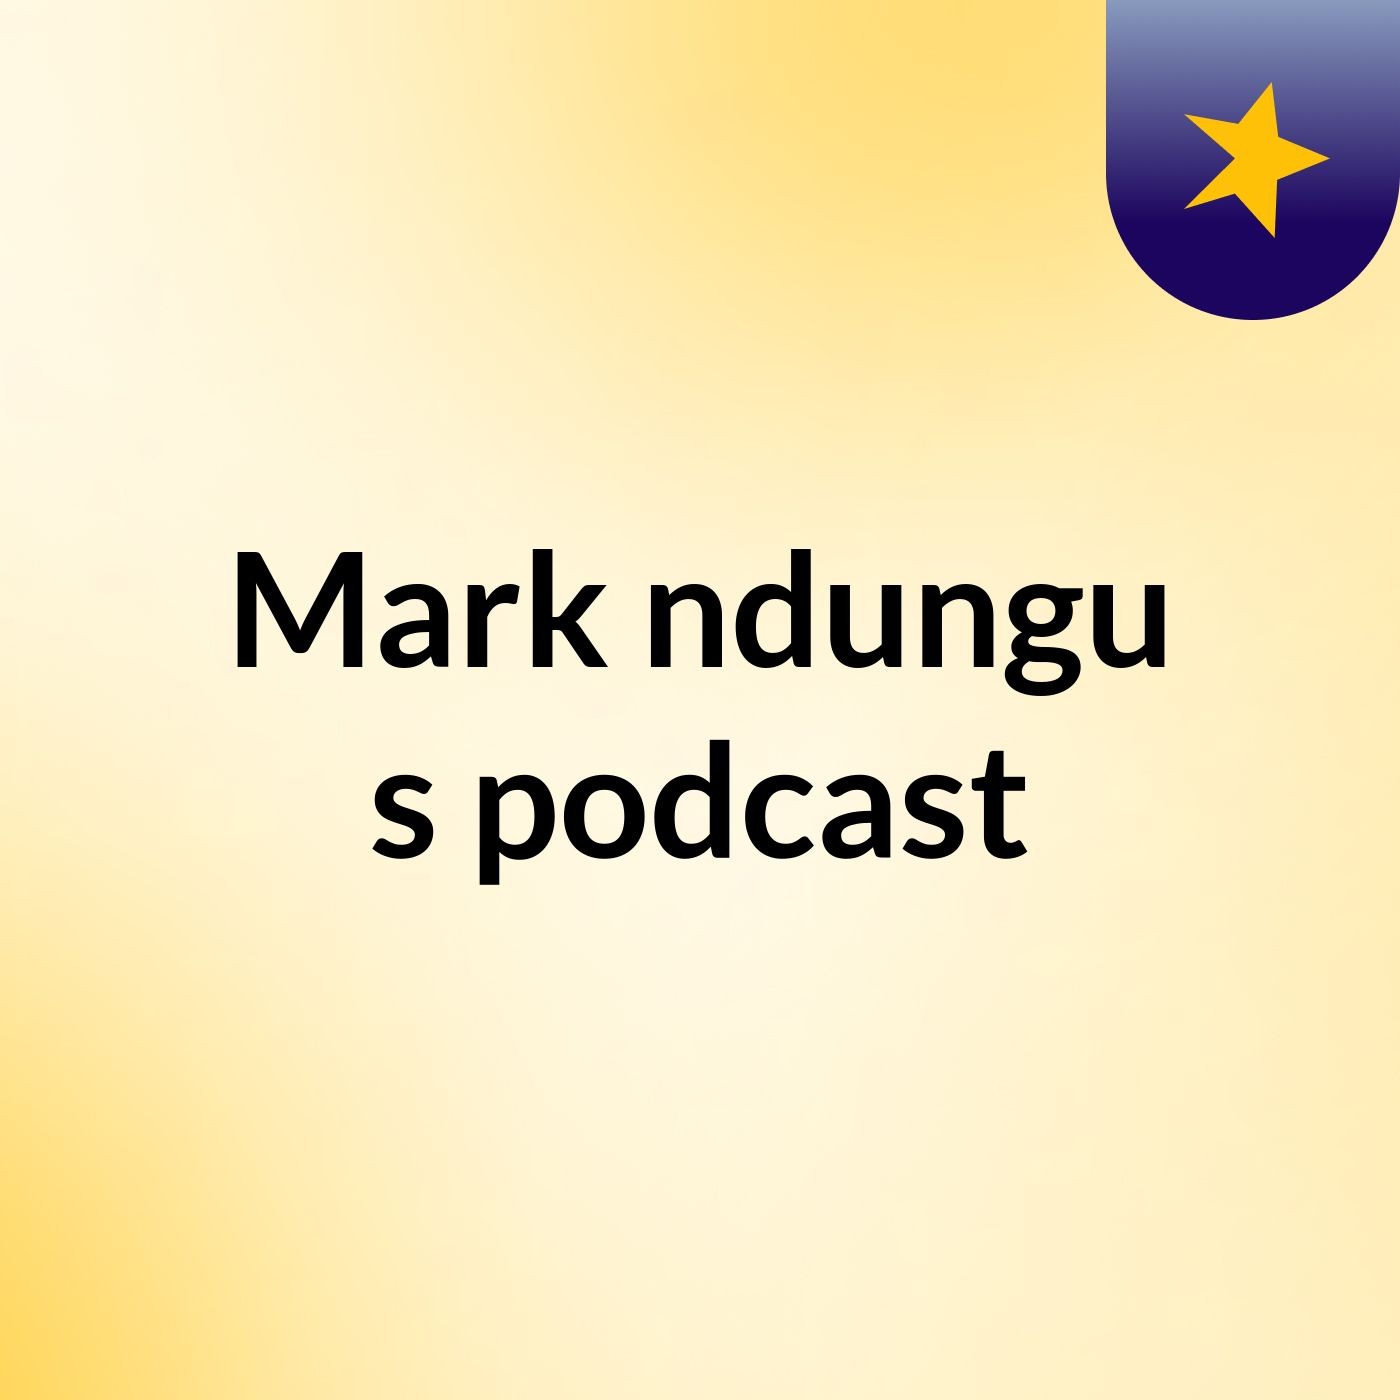 Episode 17 - Mark ndungu's podcast